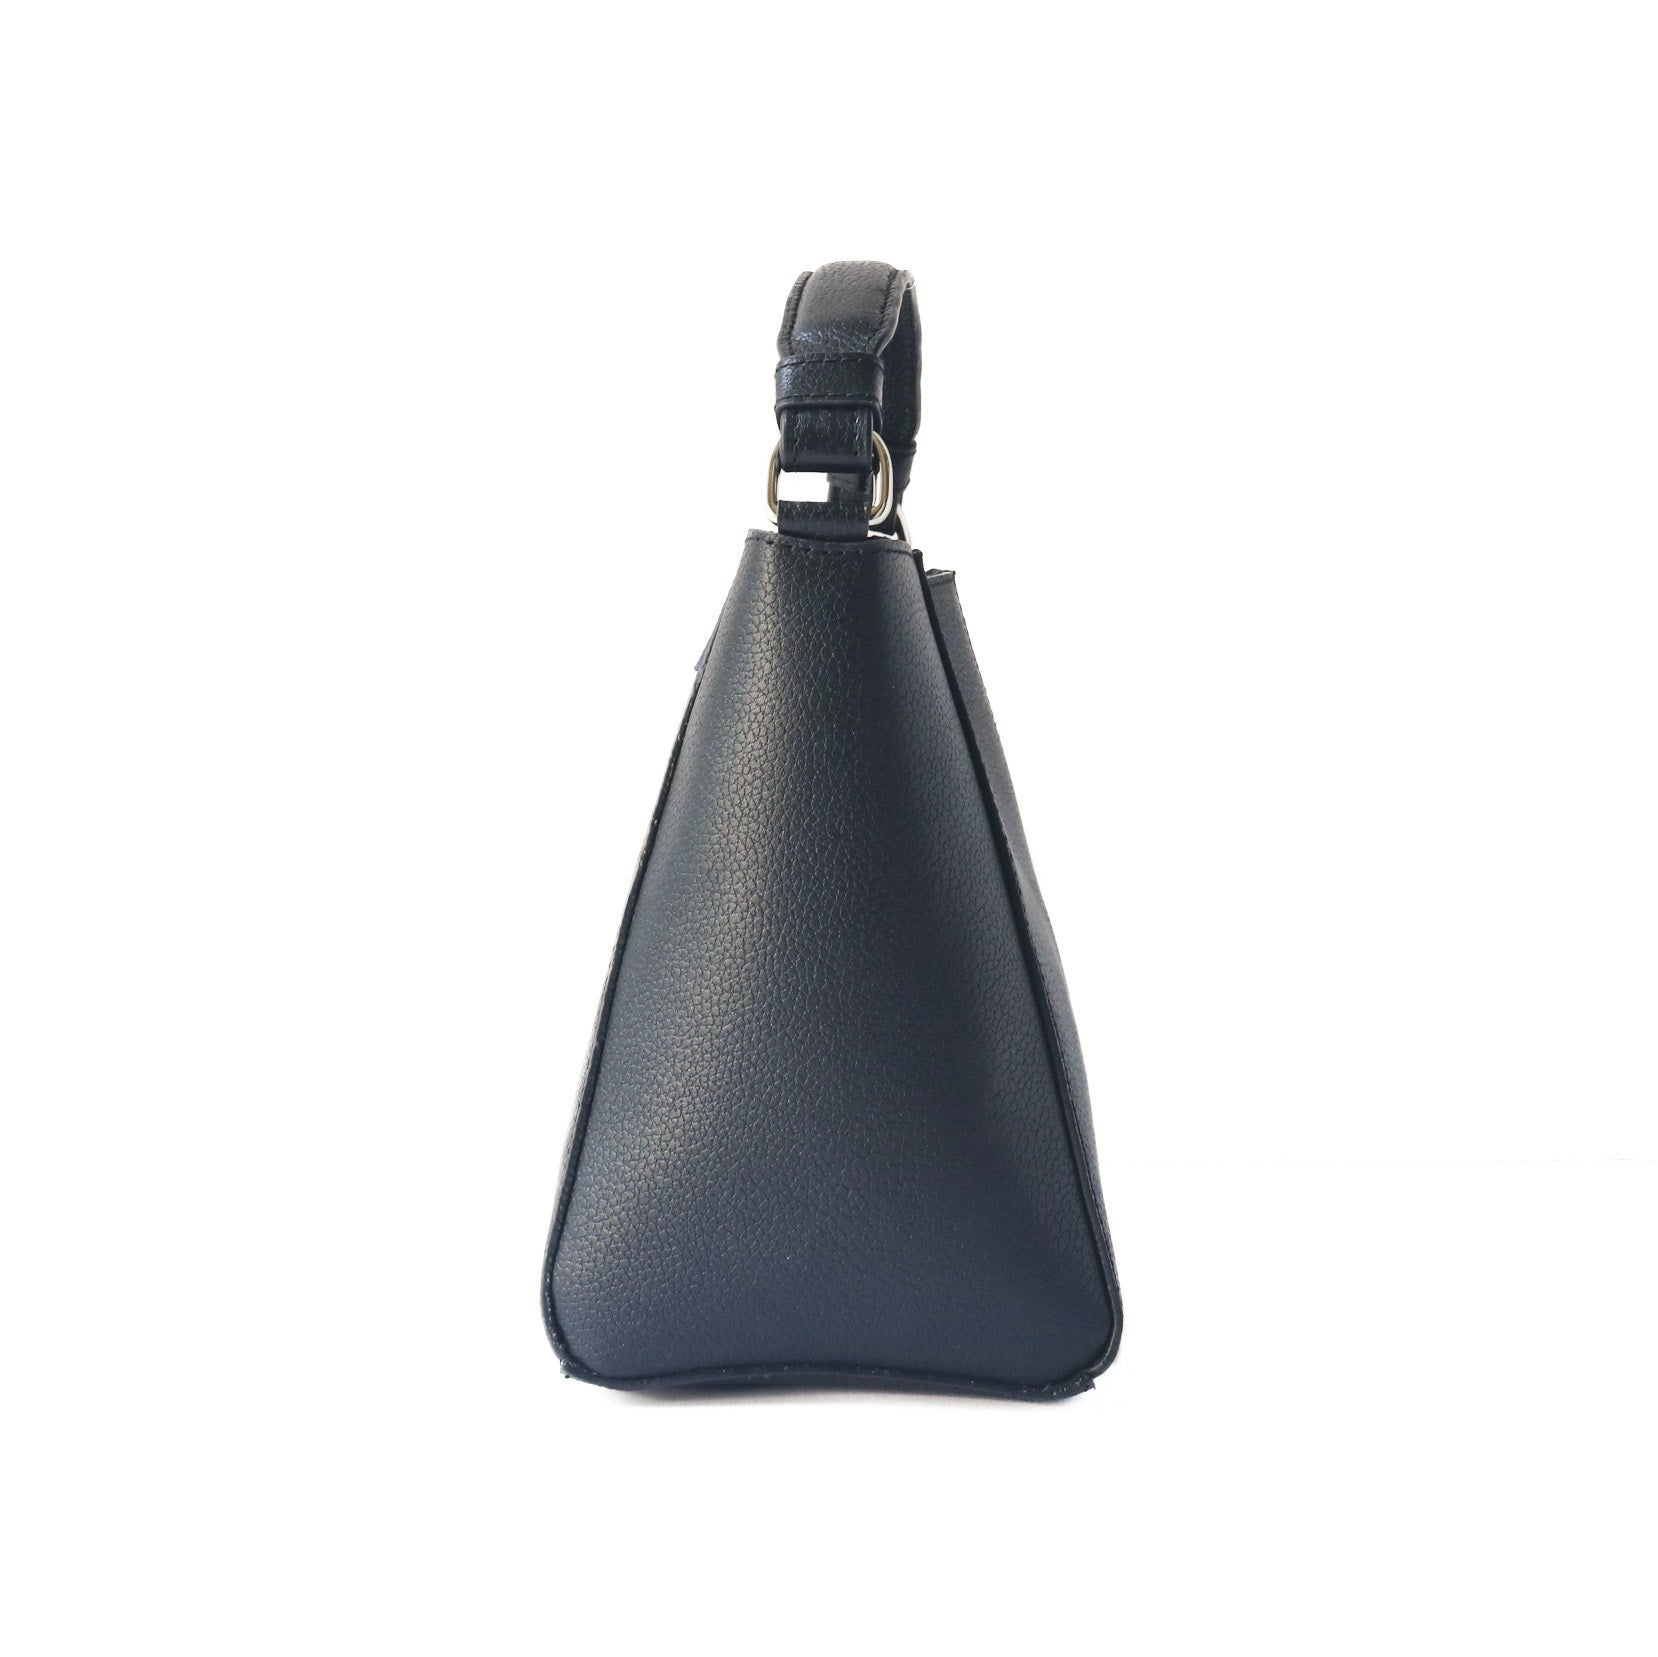 Amica Bag Collection | Artisan Leather Handbags | Tin Marin Brand